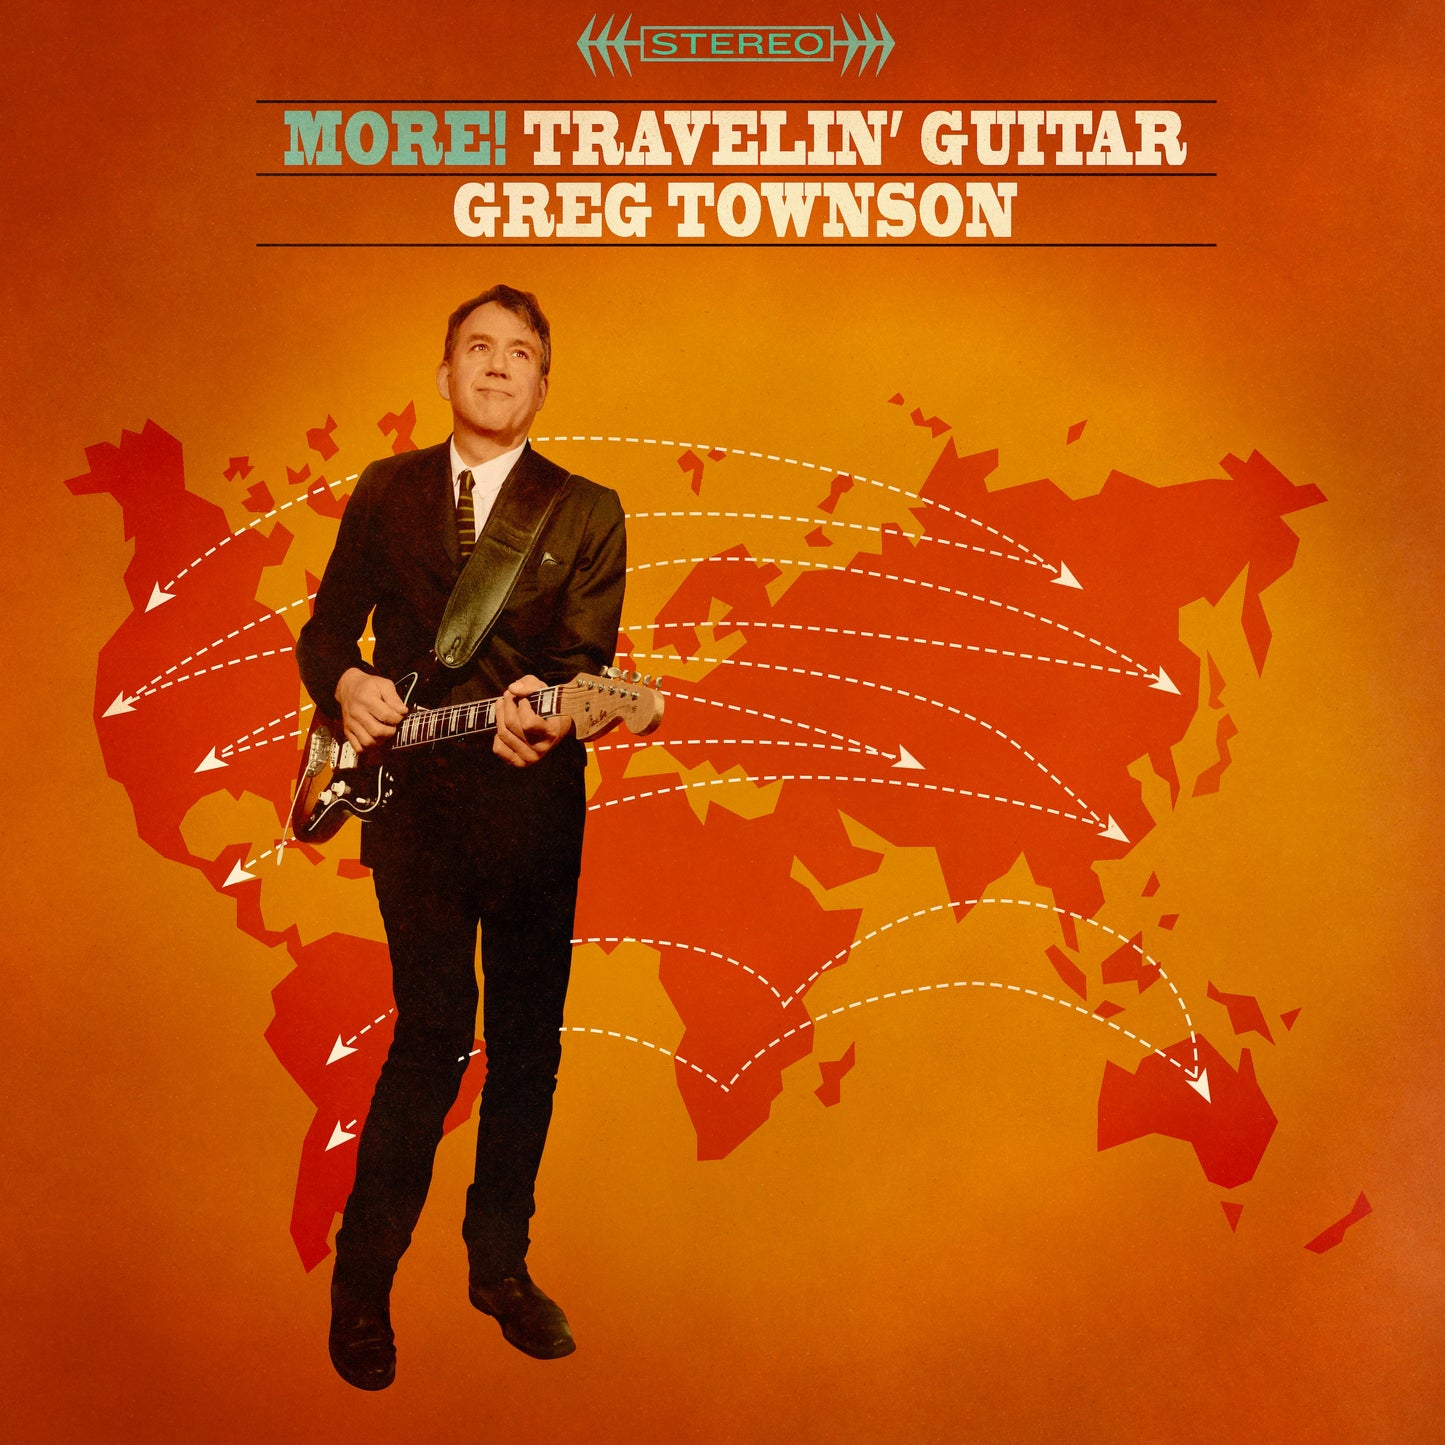 Greg Townson “More! Travelin’ Guitar” LP